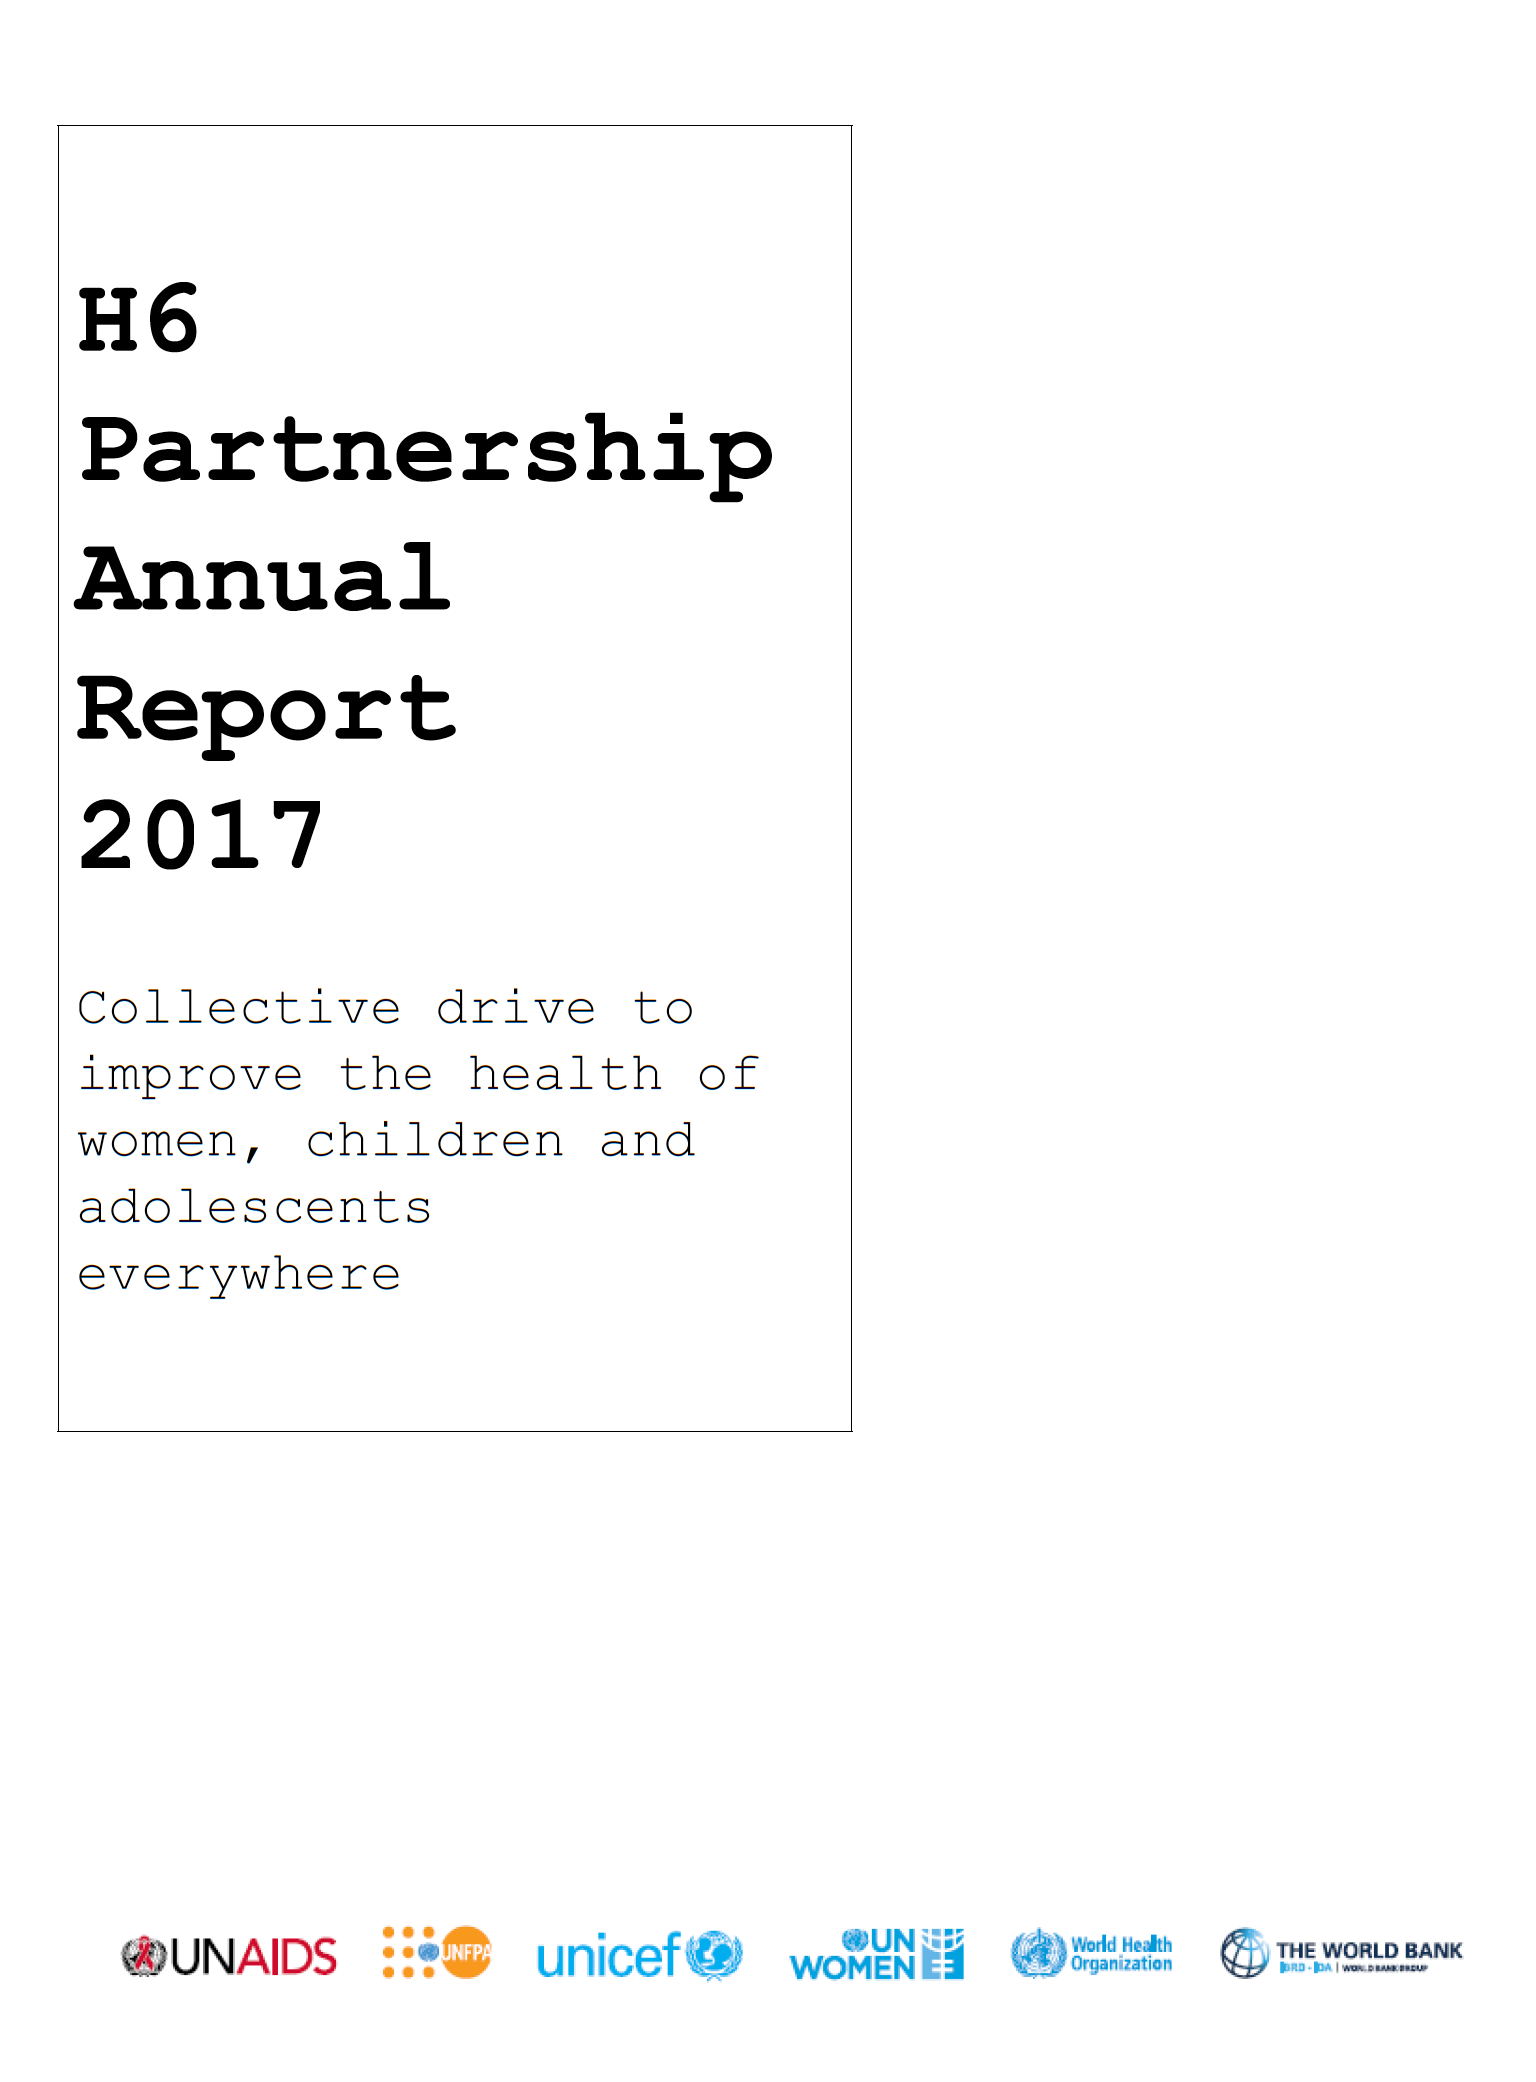 H6 Partnership Annual Report 2017